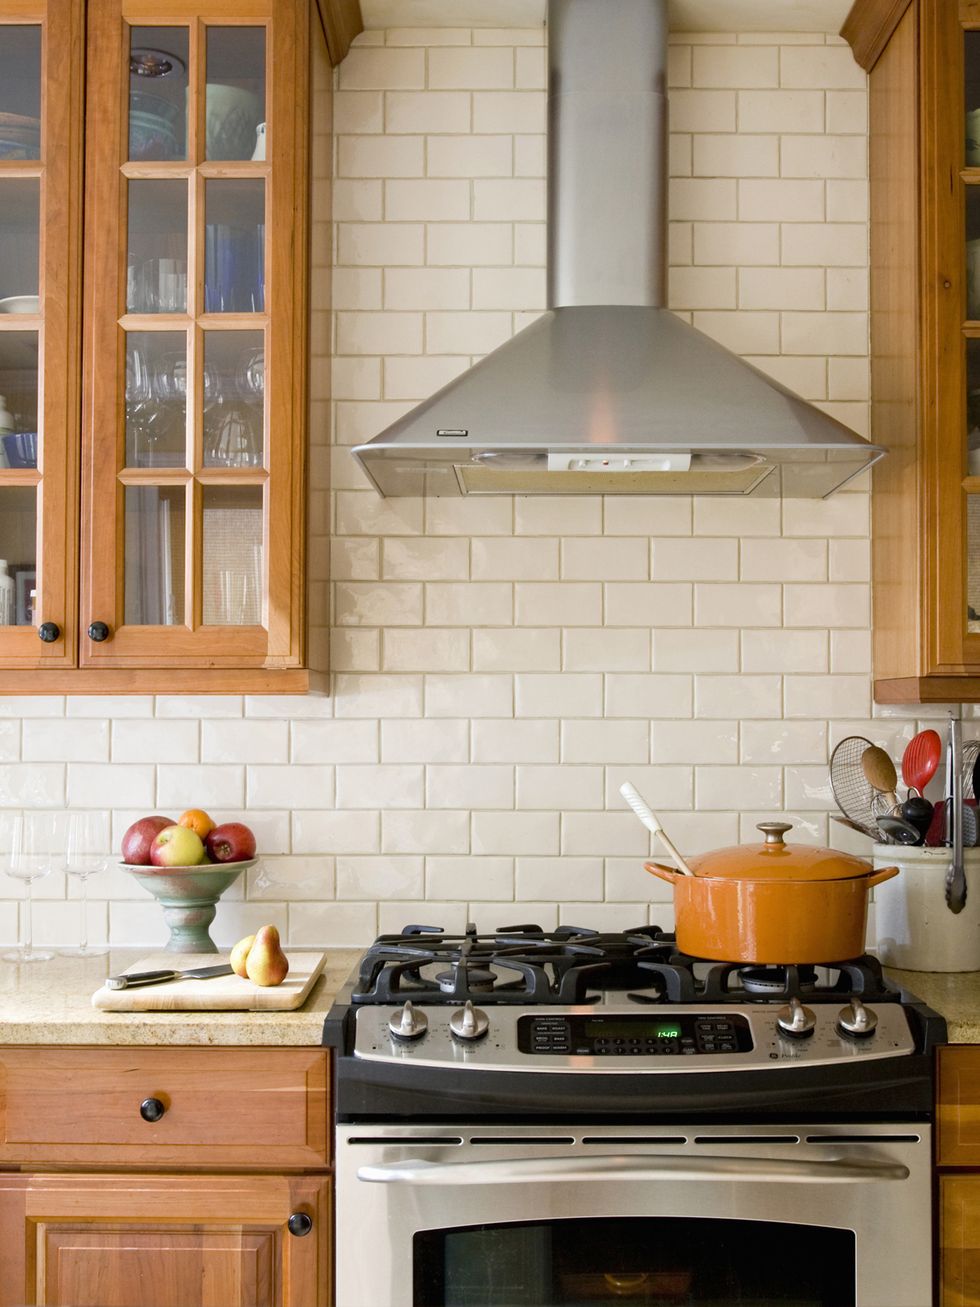 Gas stove, Room, Major appliance, Cooktop, Stove, Kitchen, Kitchen stove, Kitchen appliance, Home appliance, Countertop, 